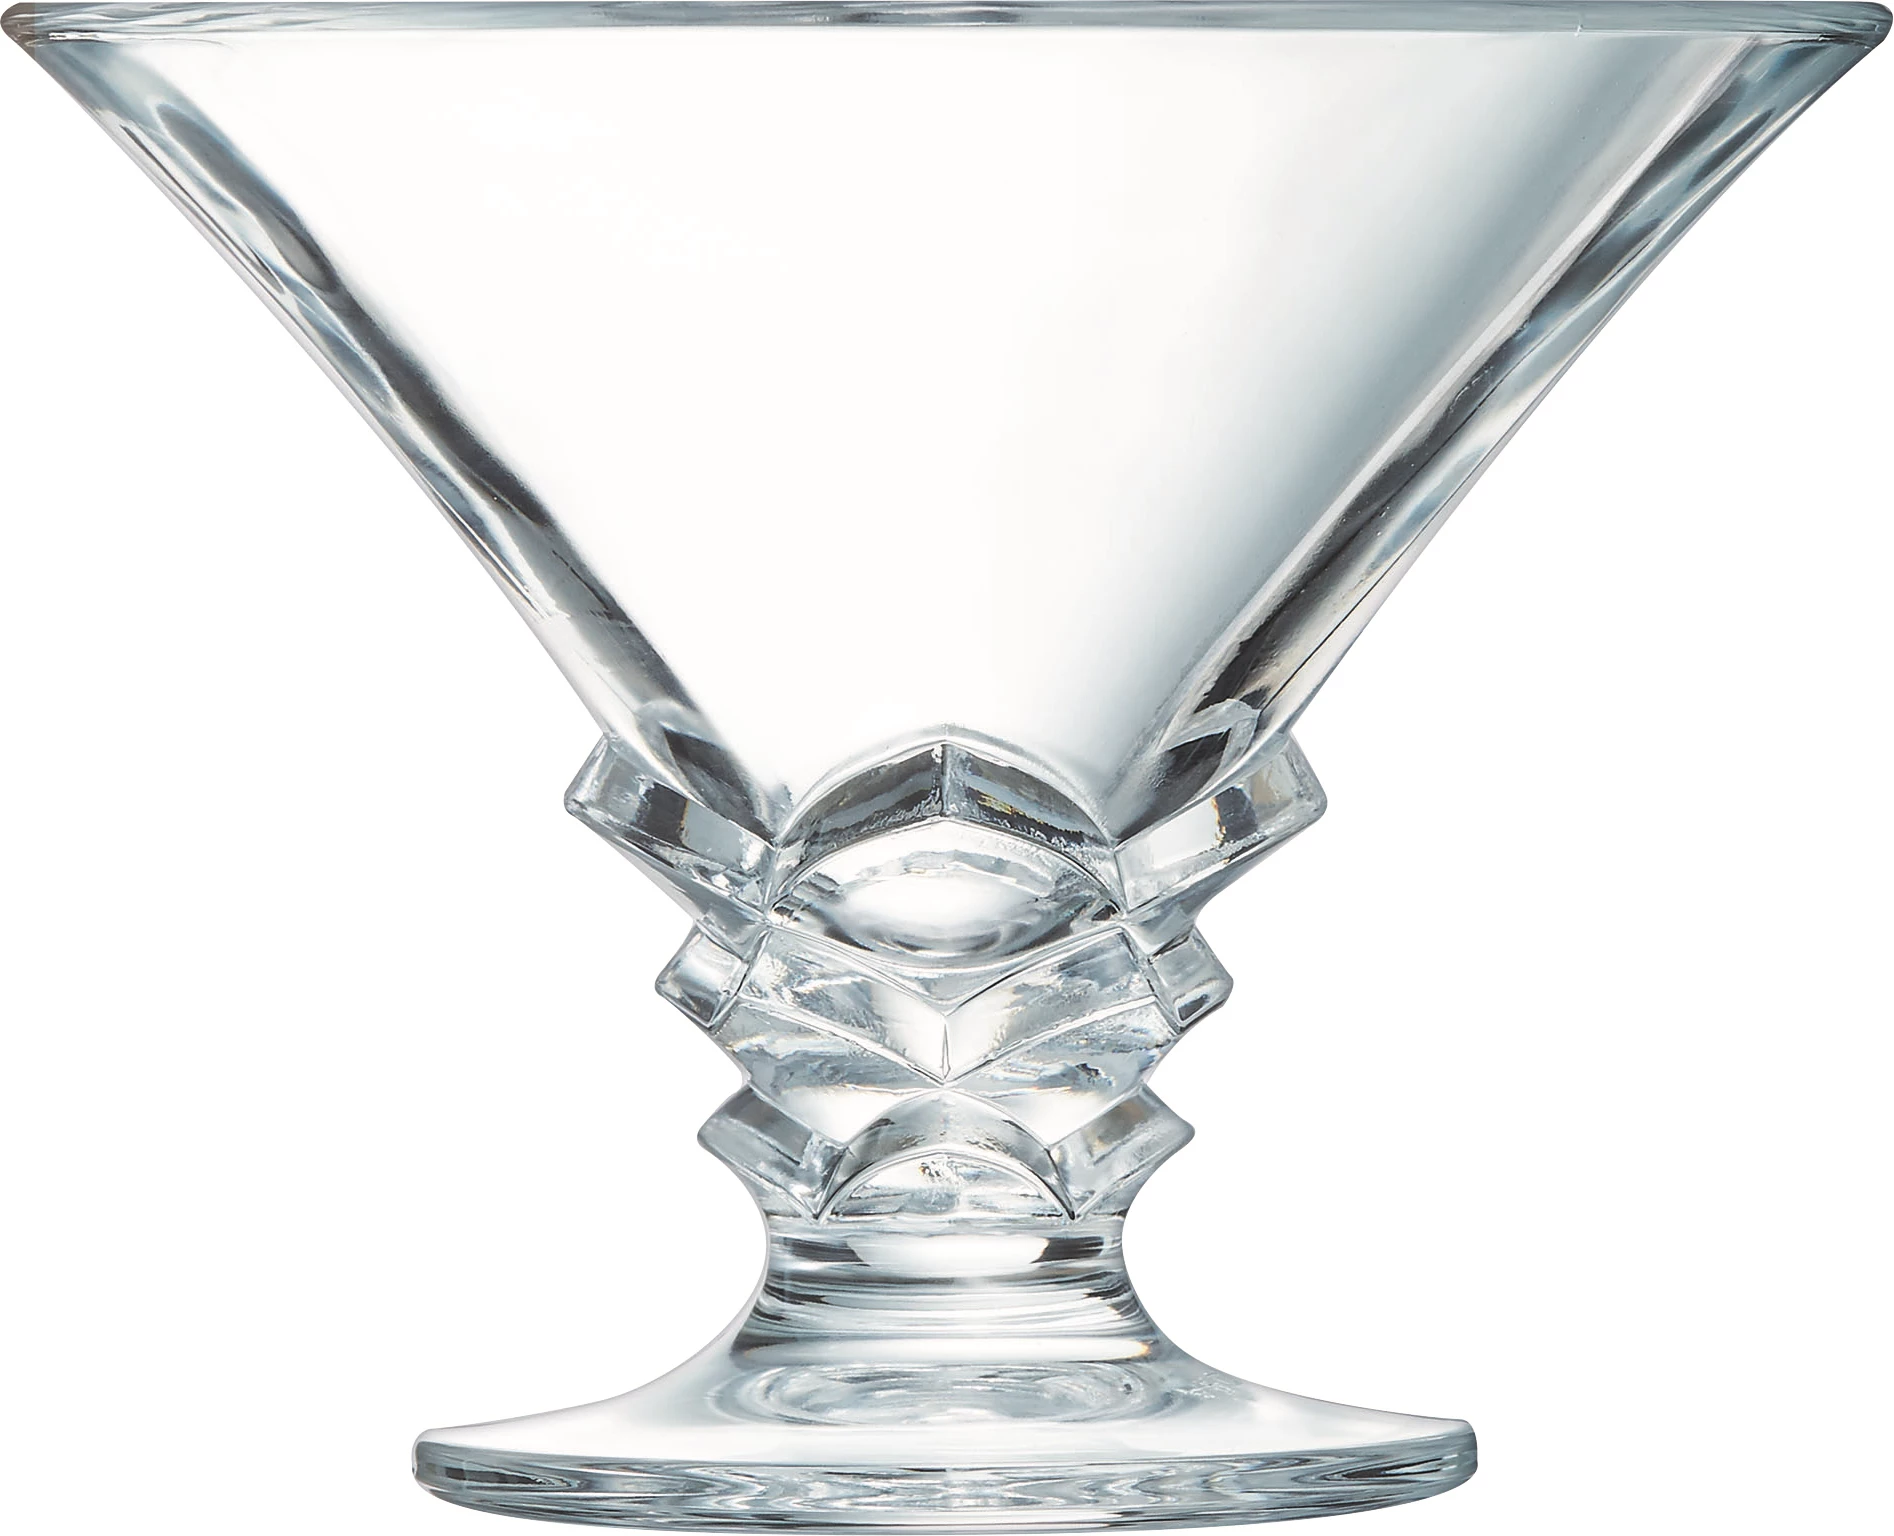 Arcoroc Palmier isglas med slebet stilk, 21 cl